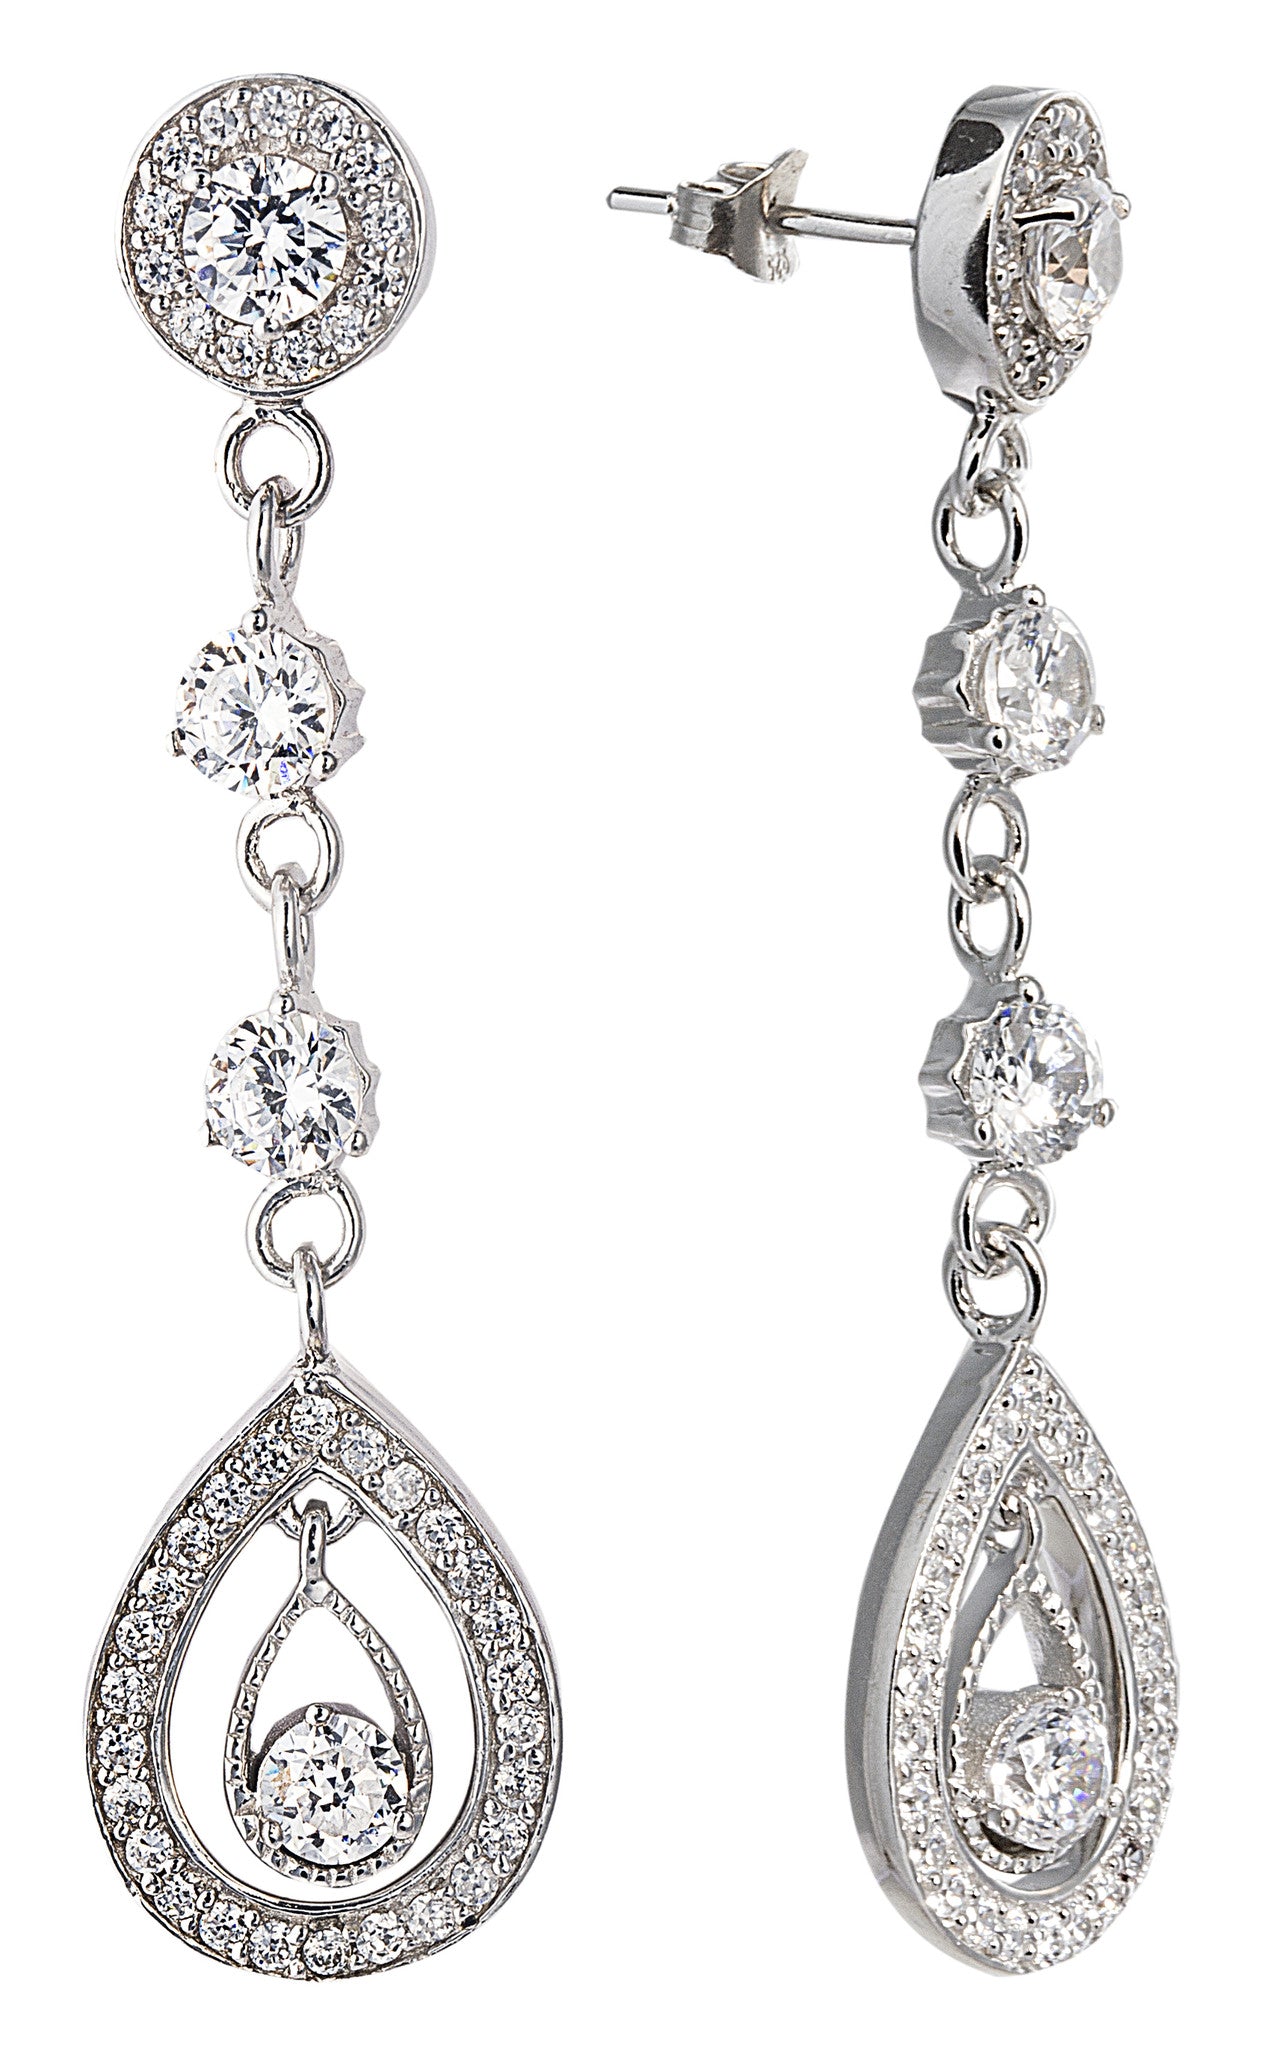 Regal Earrings Long Earrings in 925 Sterling Silver with Cubic Zirconia. Worldwide shipping. Affordable luxury jewellery by Bellagio & Co.